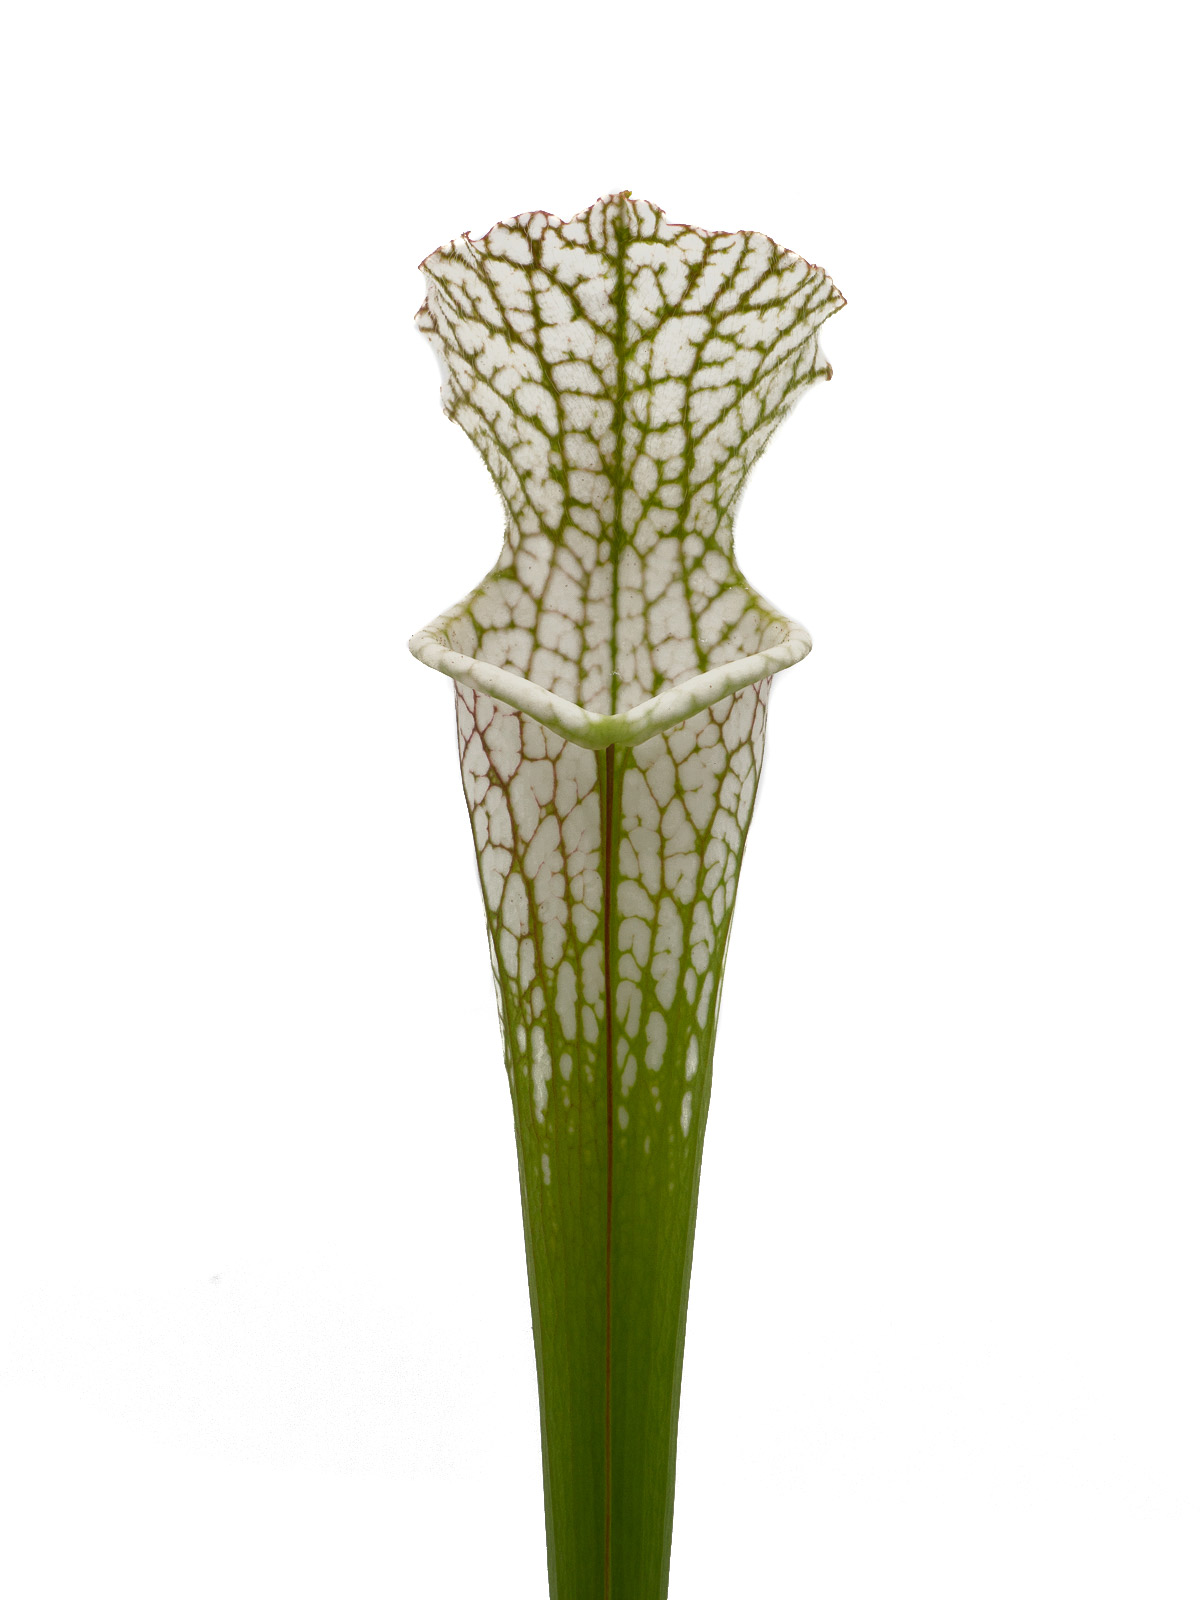 Sarracenia leucophylla - MK L72, veinless throat